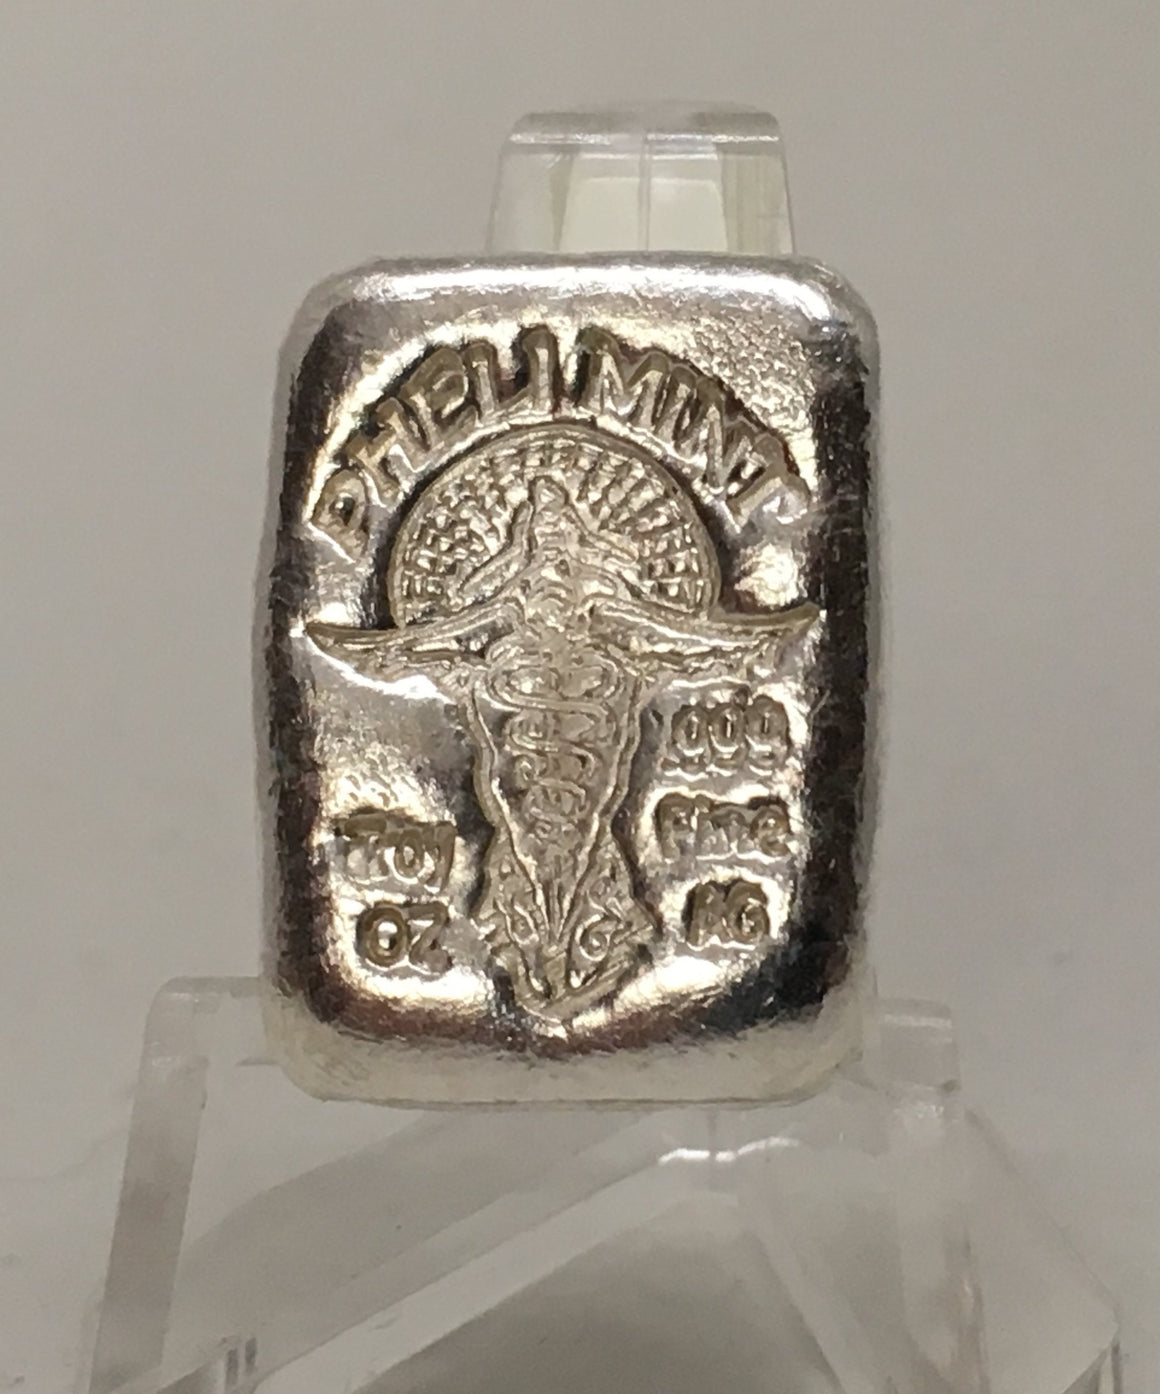 Pheli Mint Chunky Bar Version 1, Hand Poured 1oz, .999 Silver